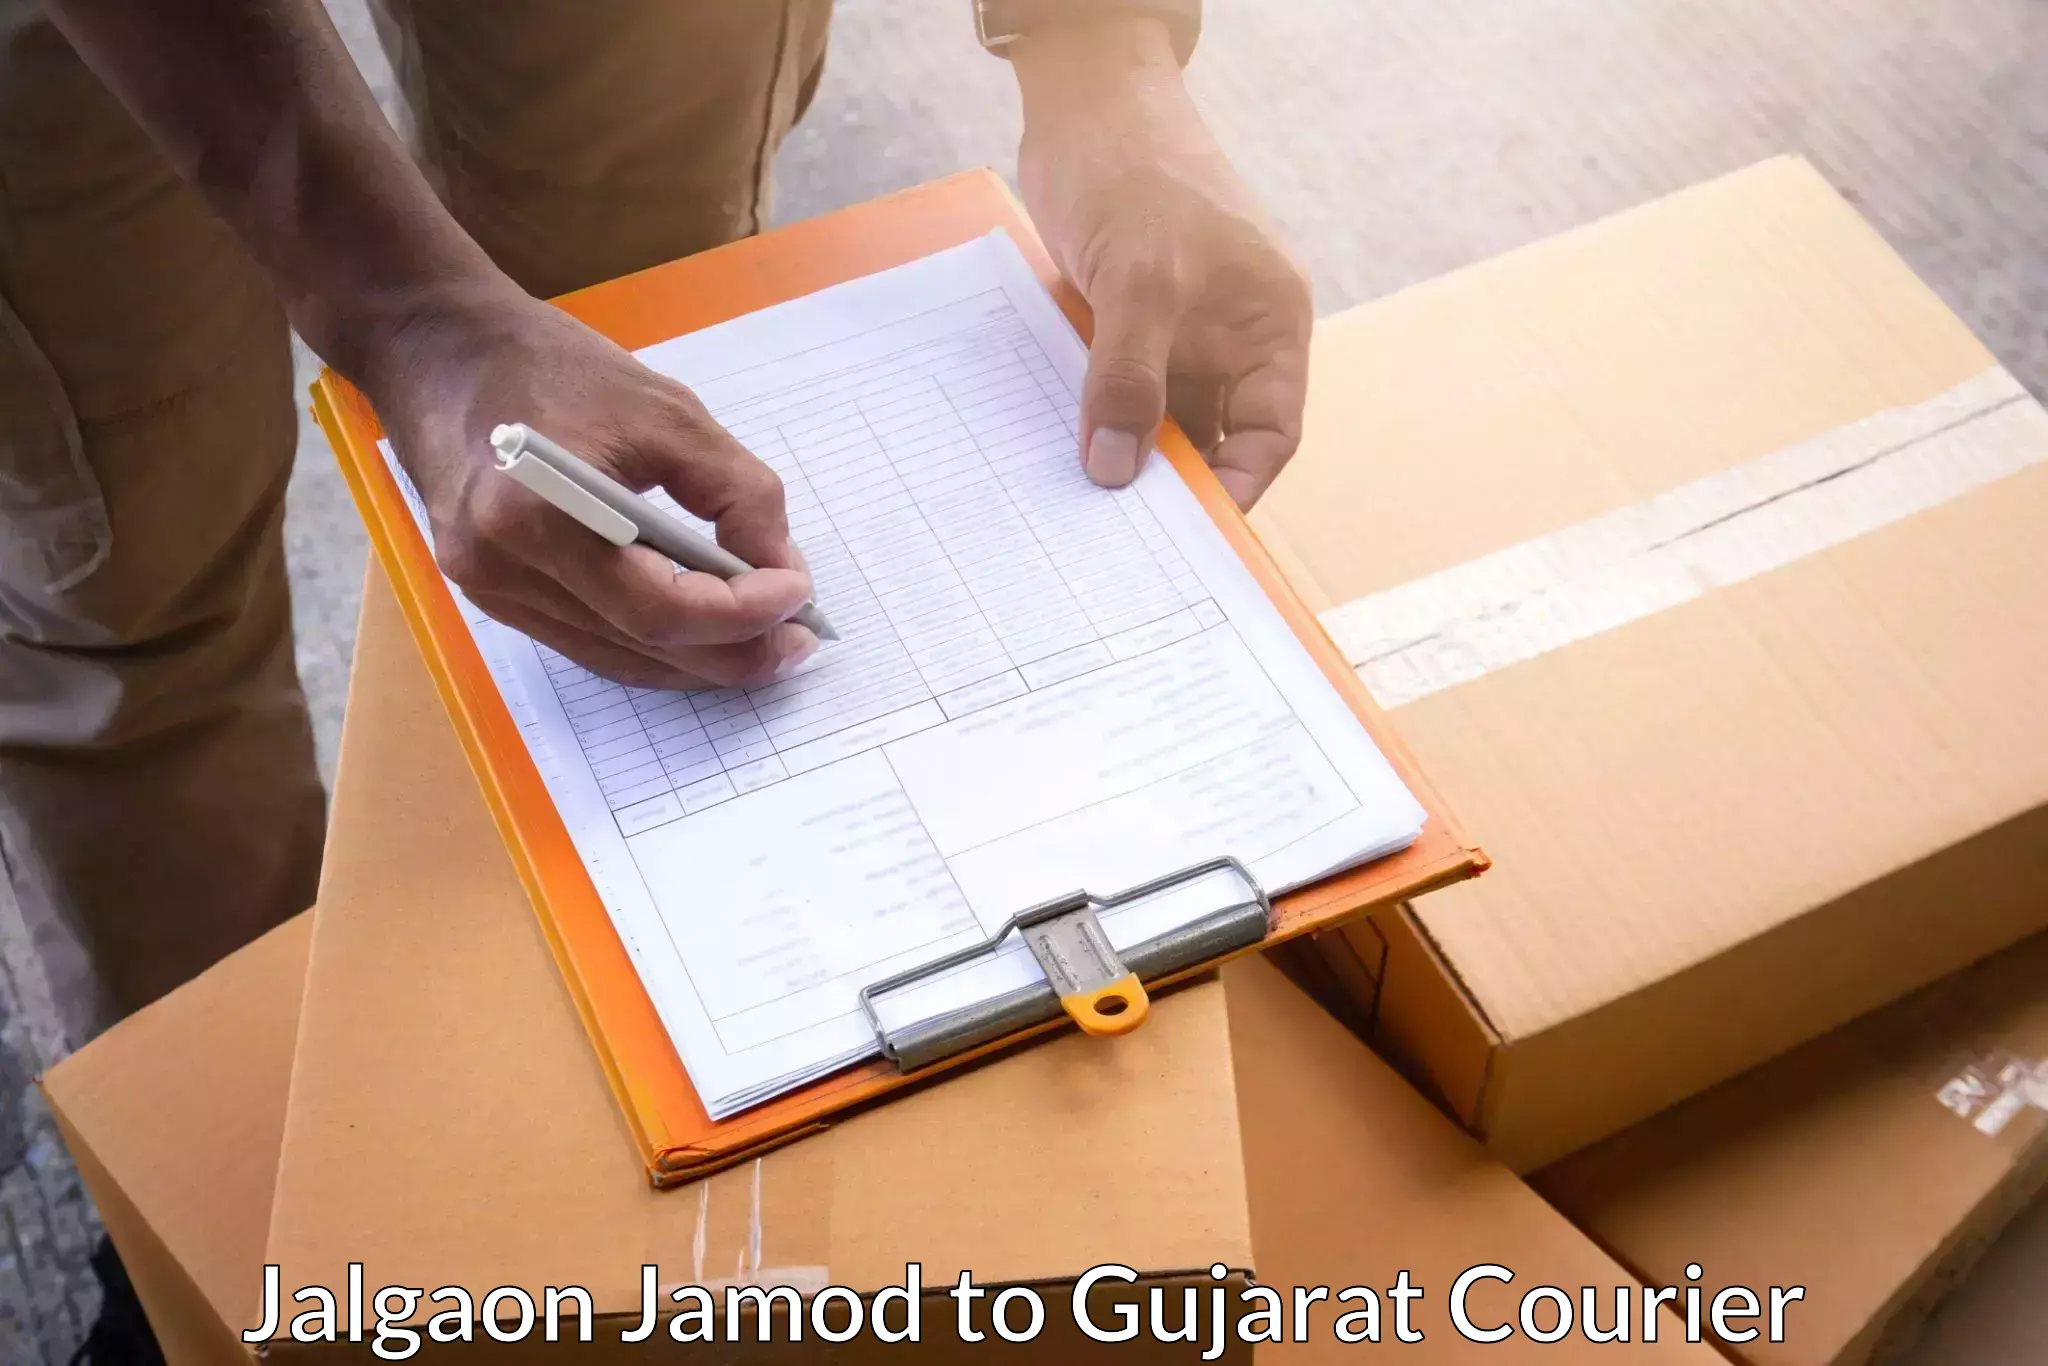 Personalized courier experiences Jalgaon Jamod to Dahod